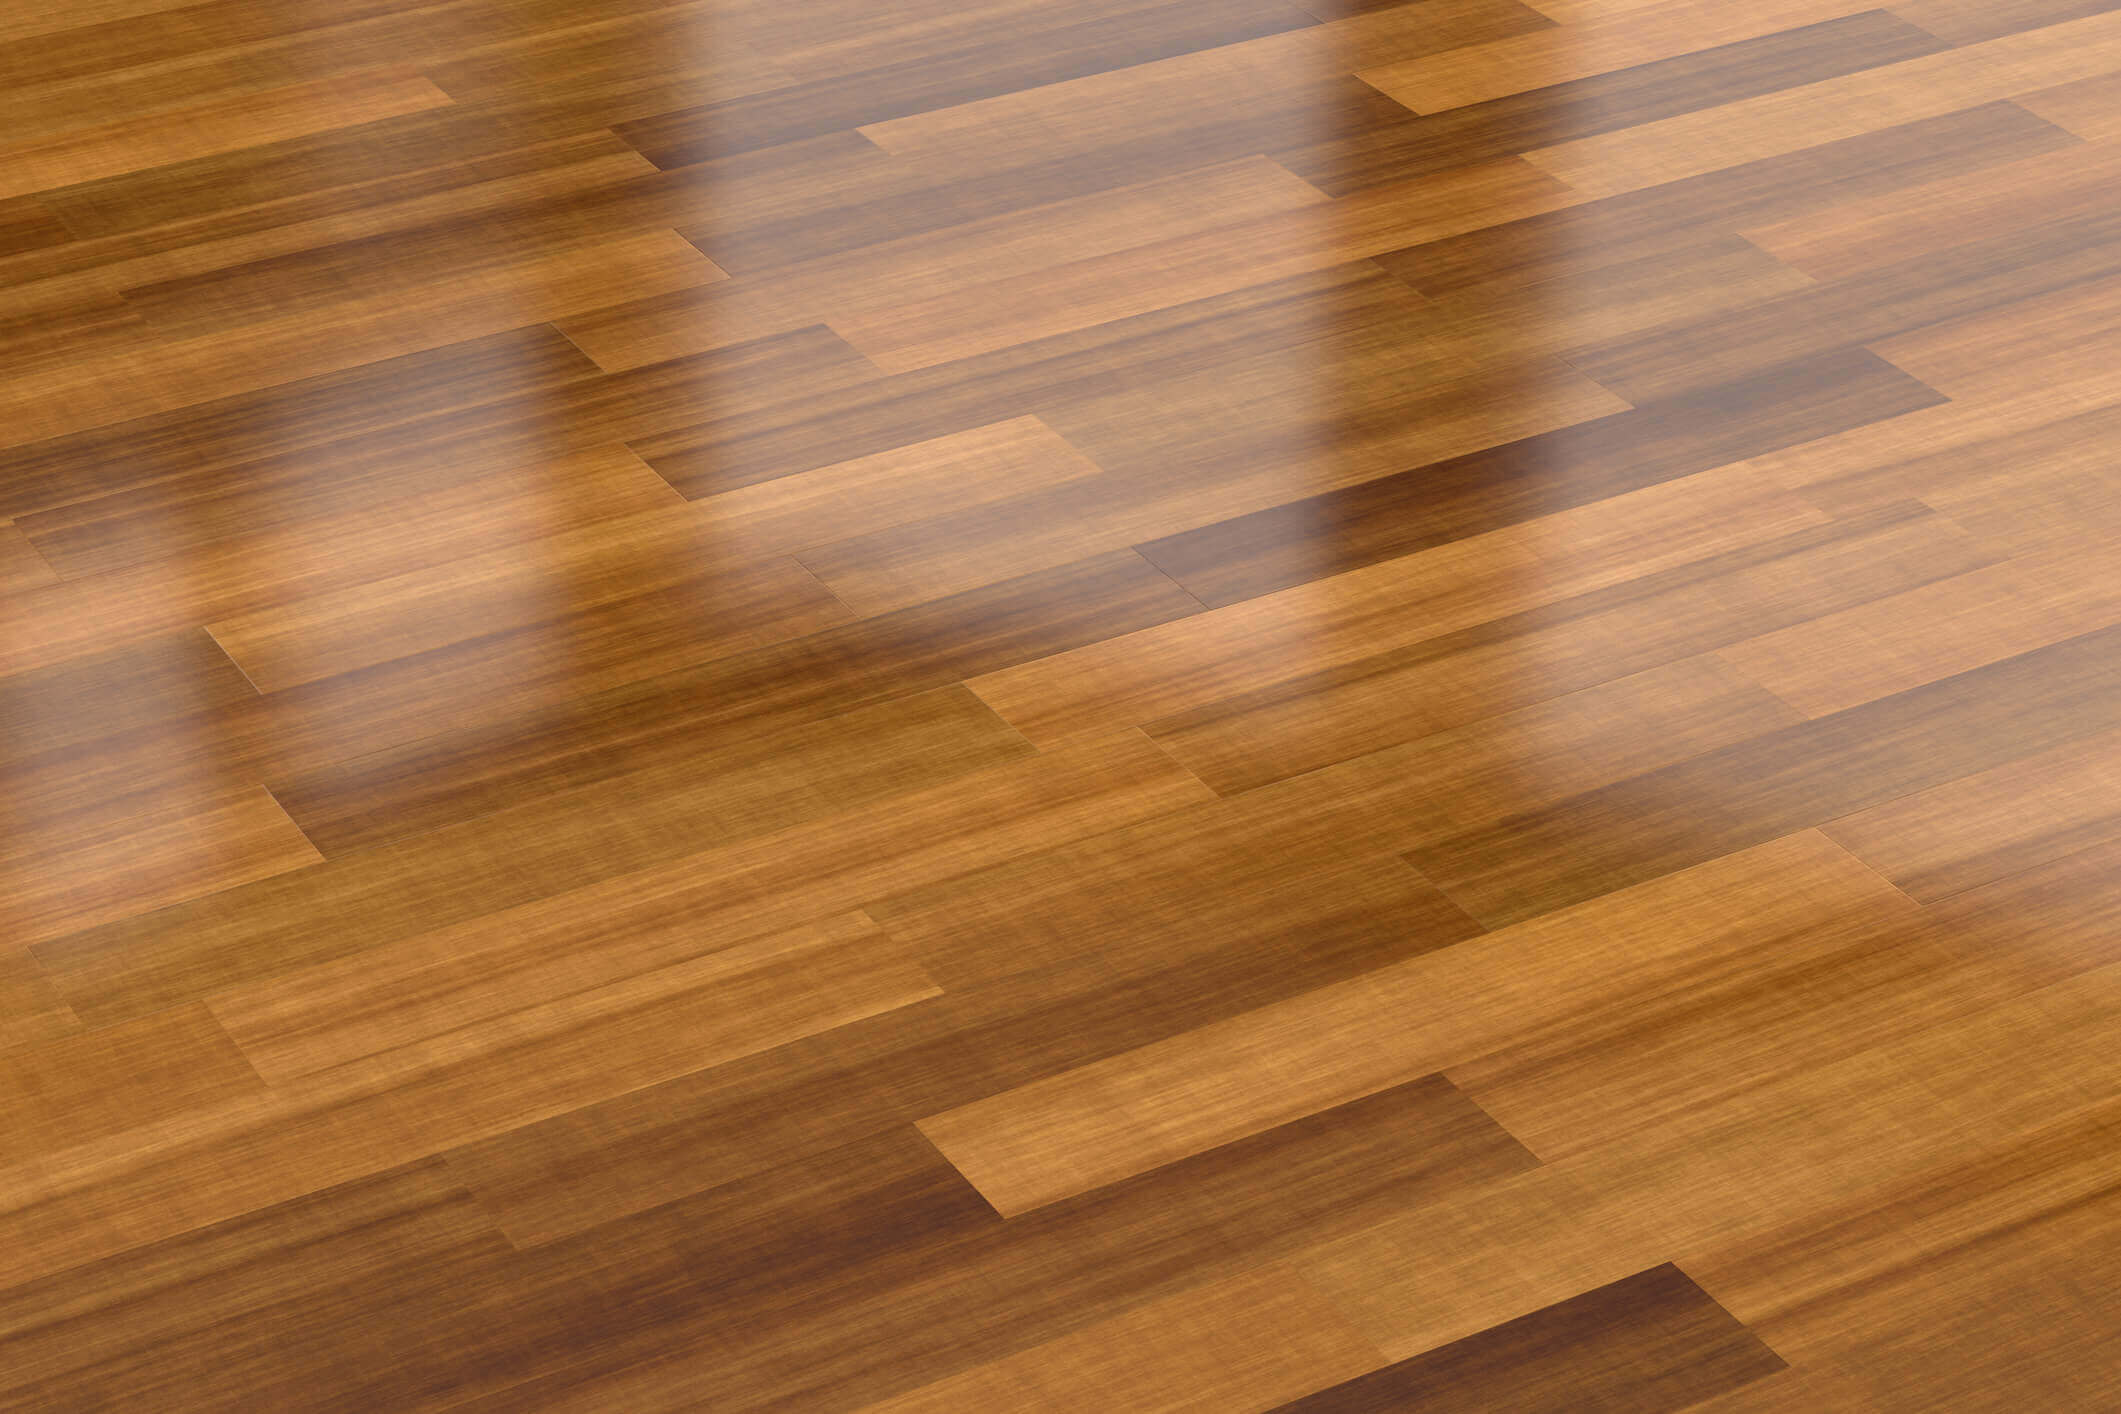 Popular Floor Board Polishing Styles in Kitchens